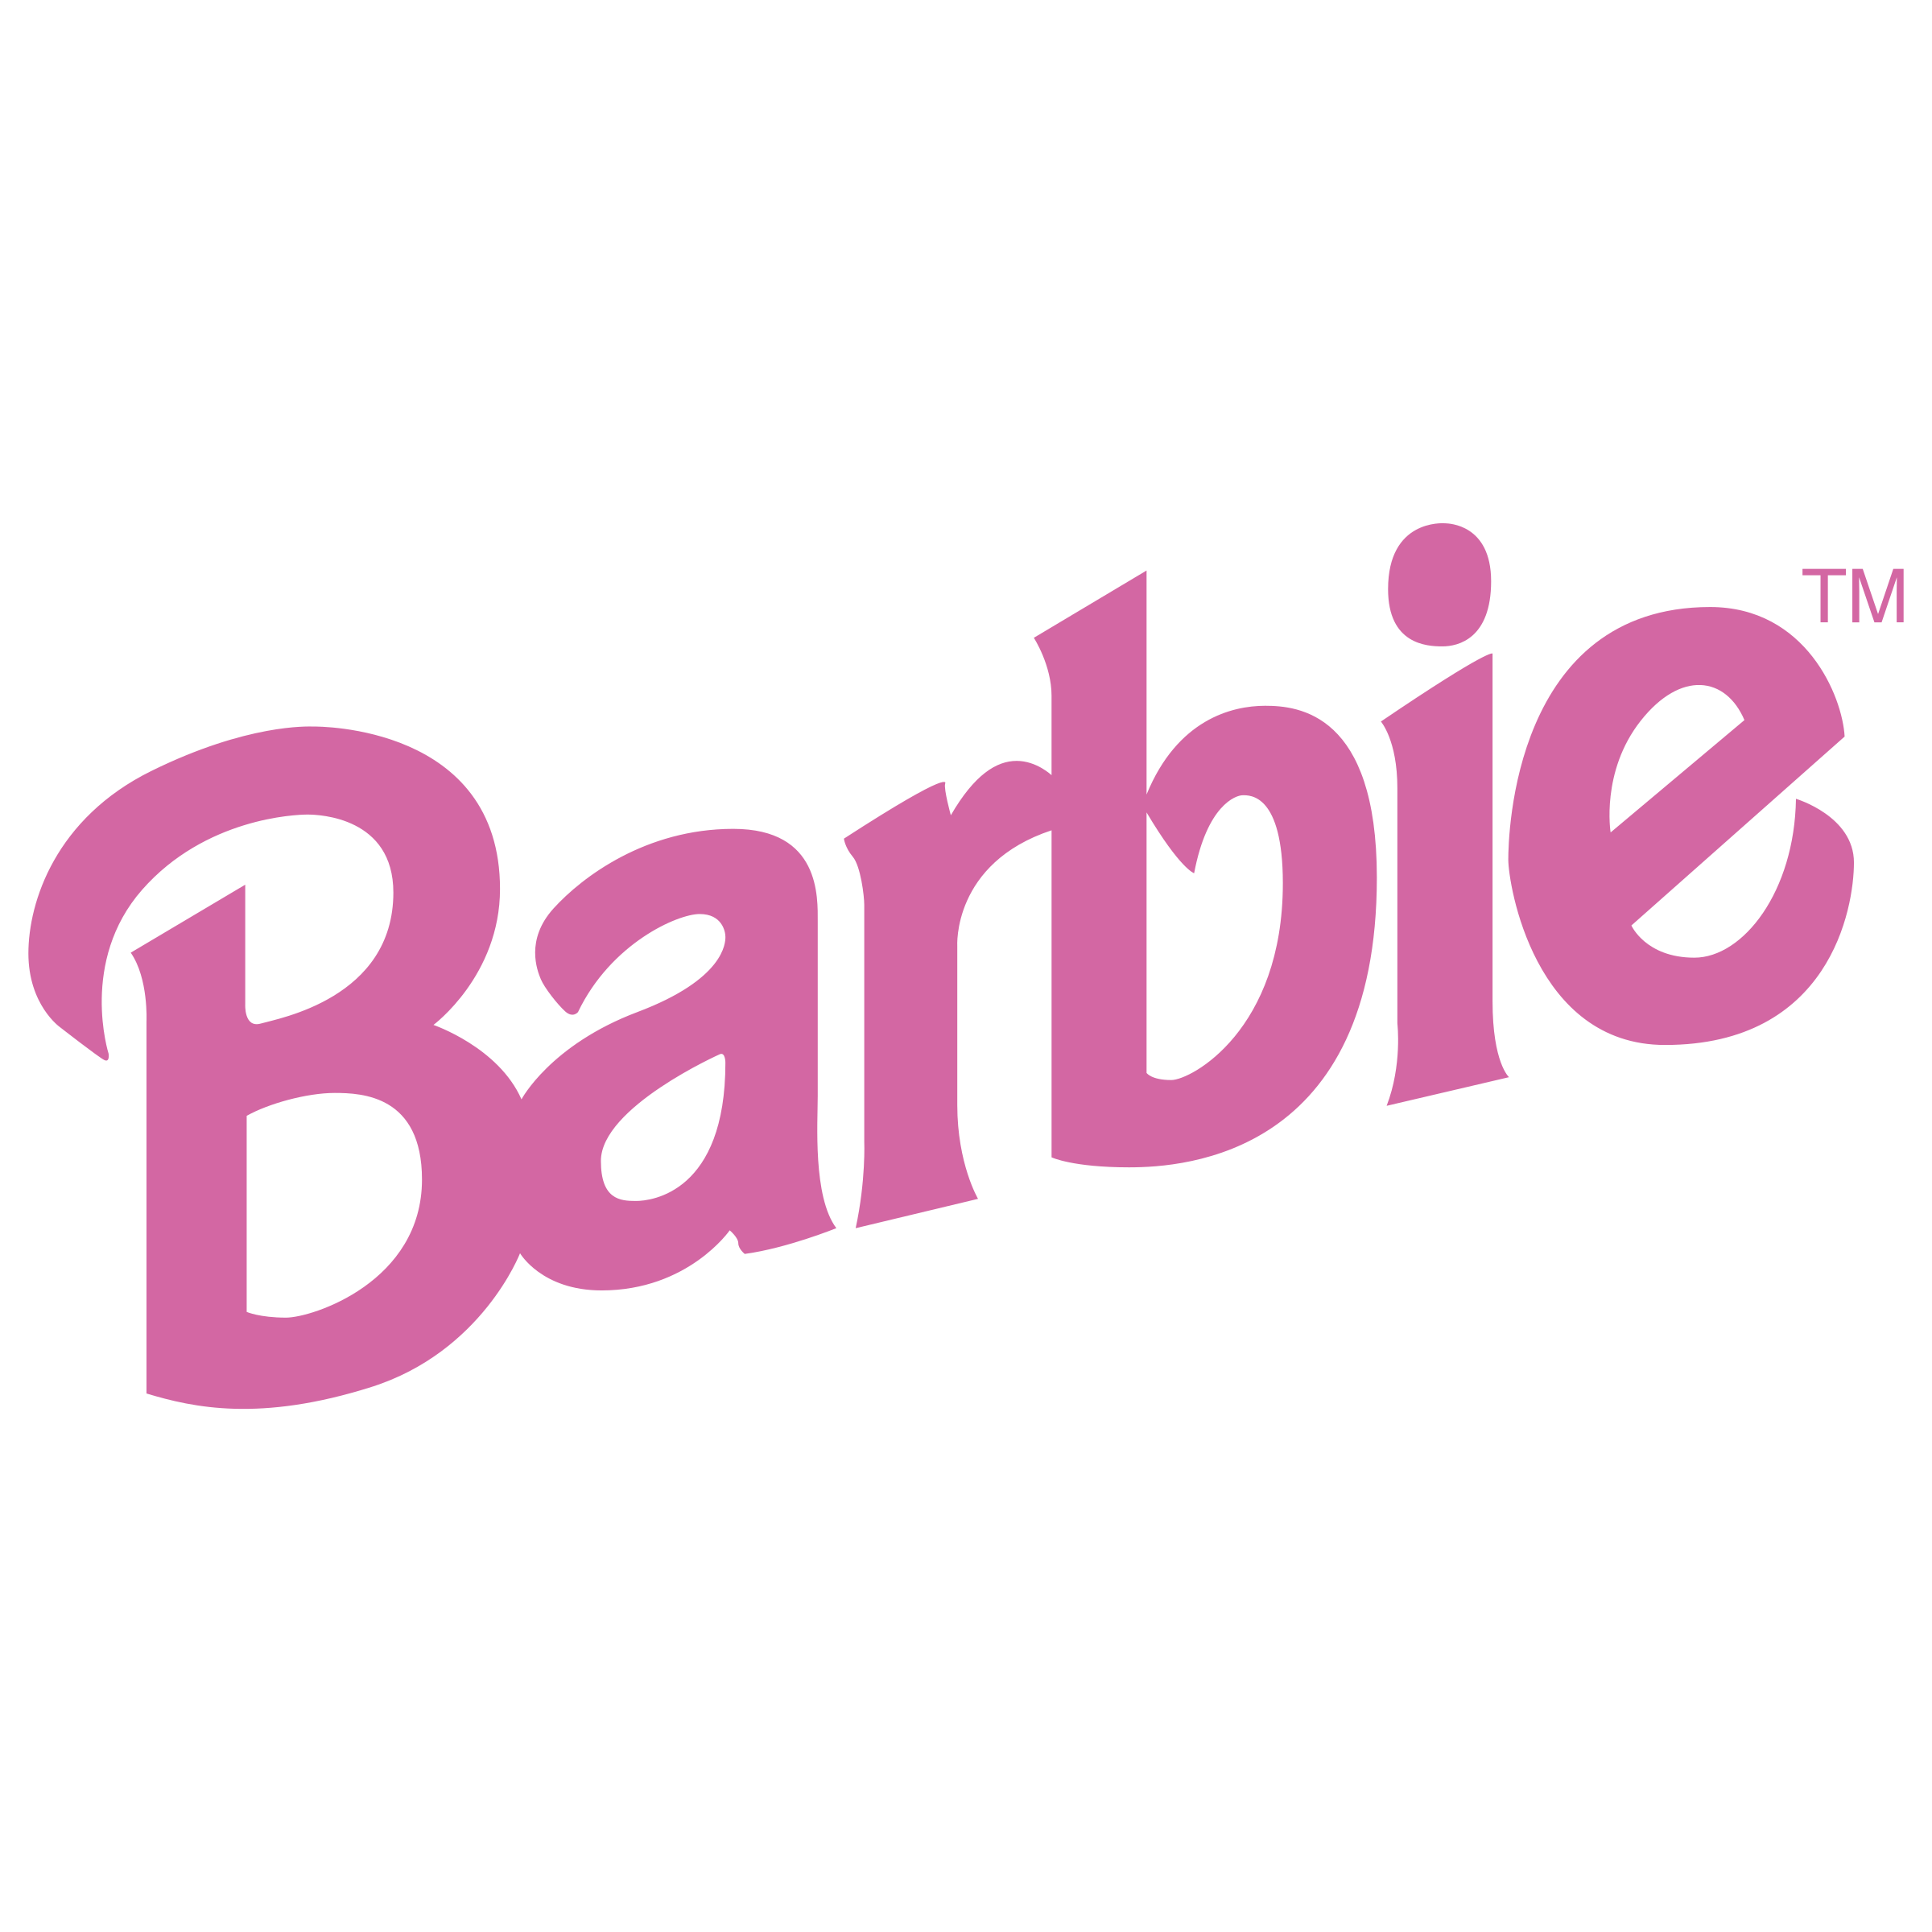 Barbie Logo PNG - 177028.